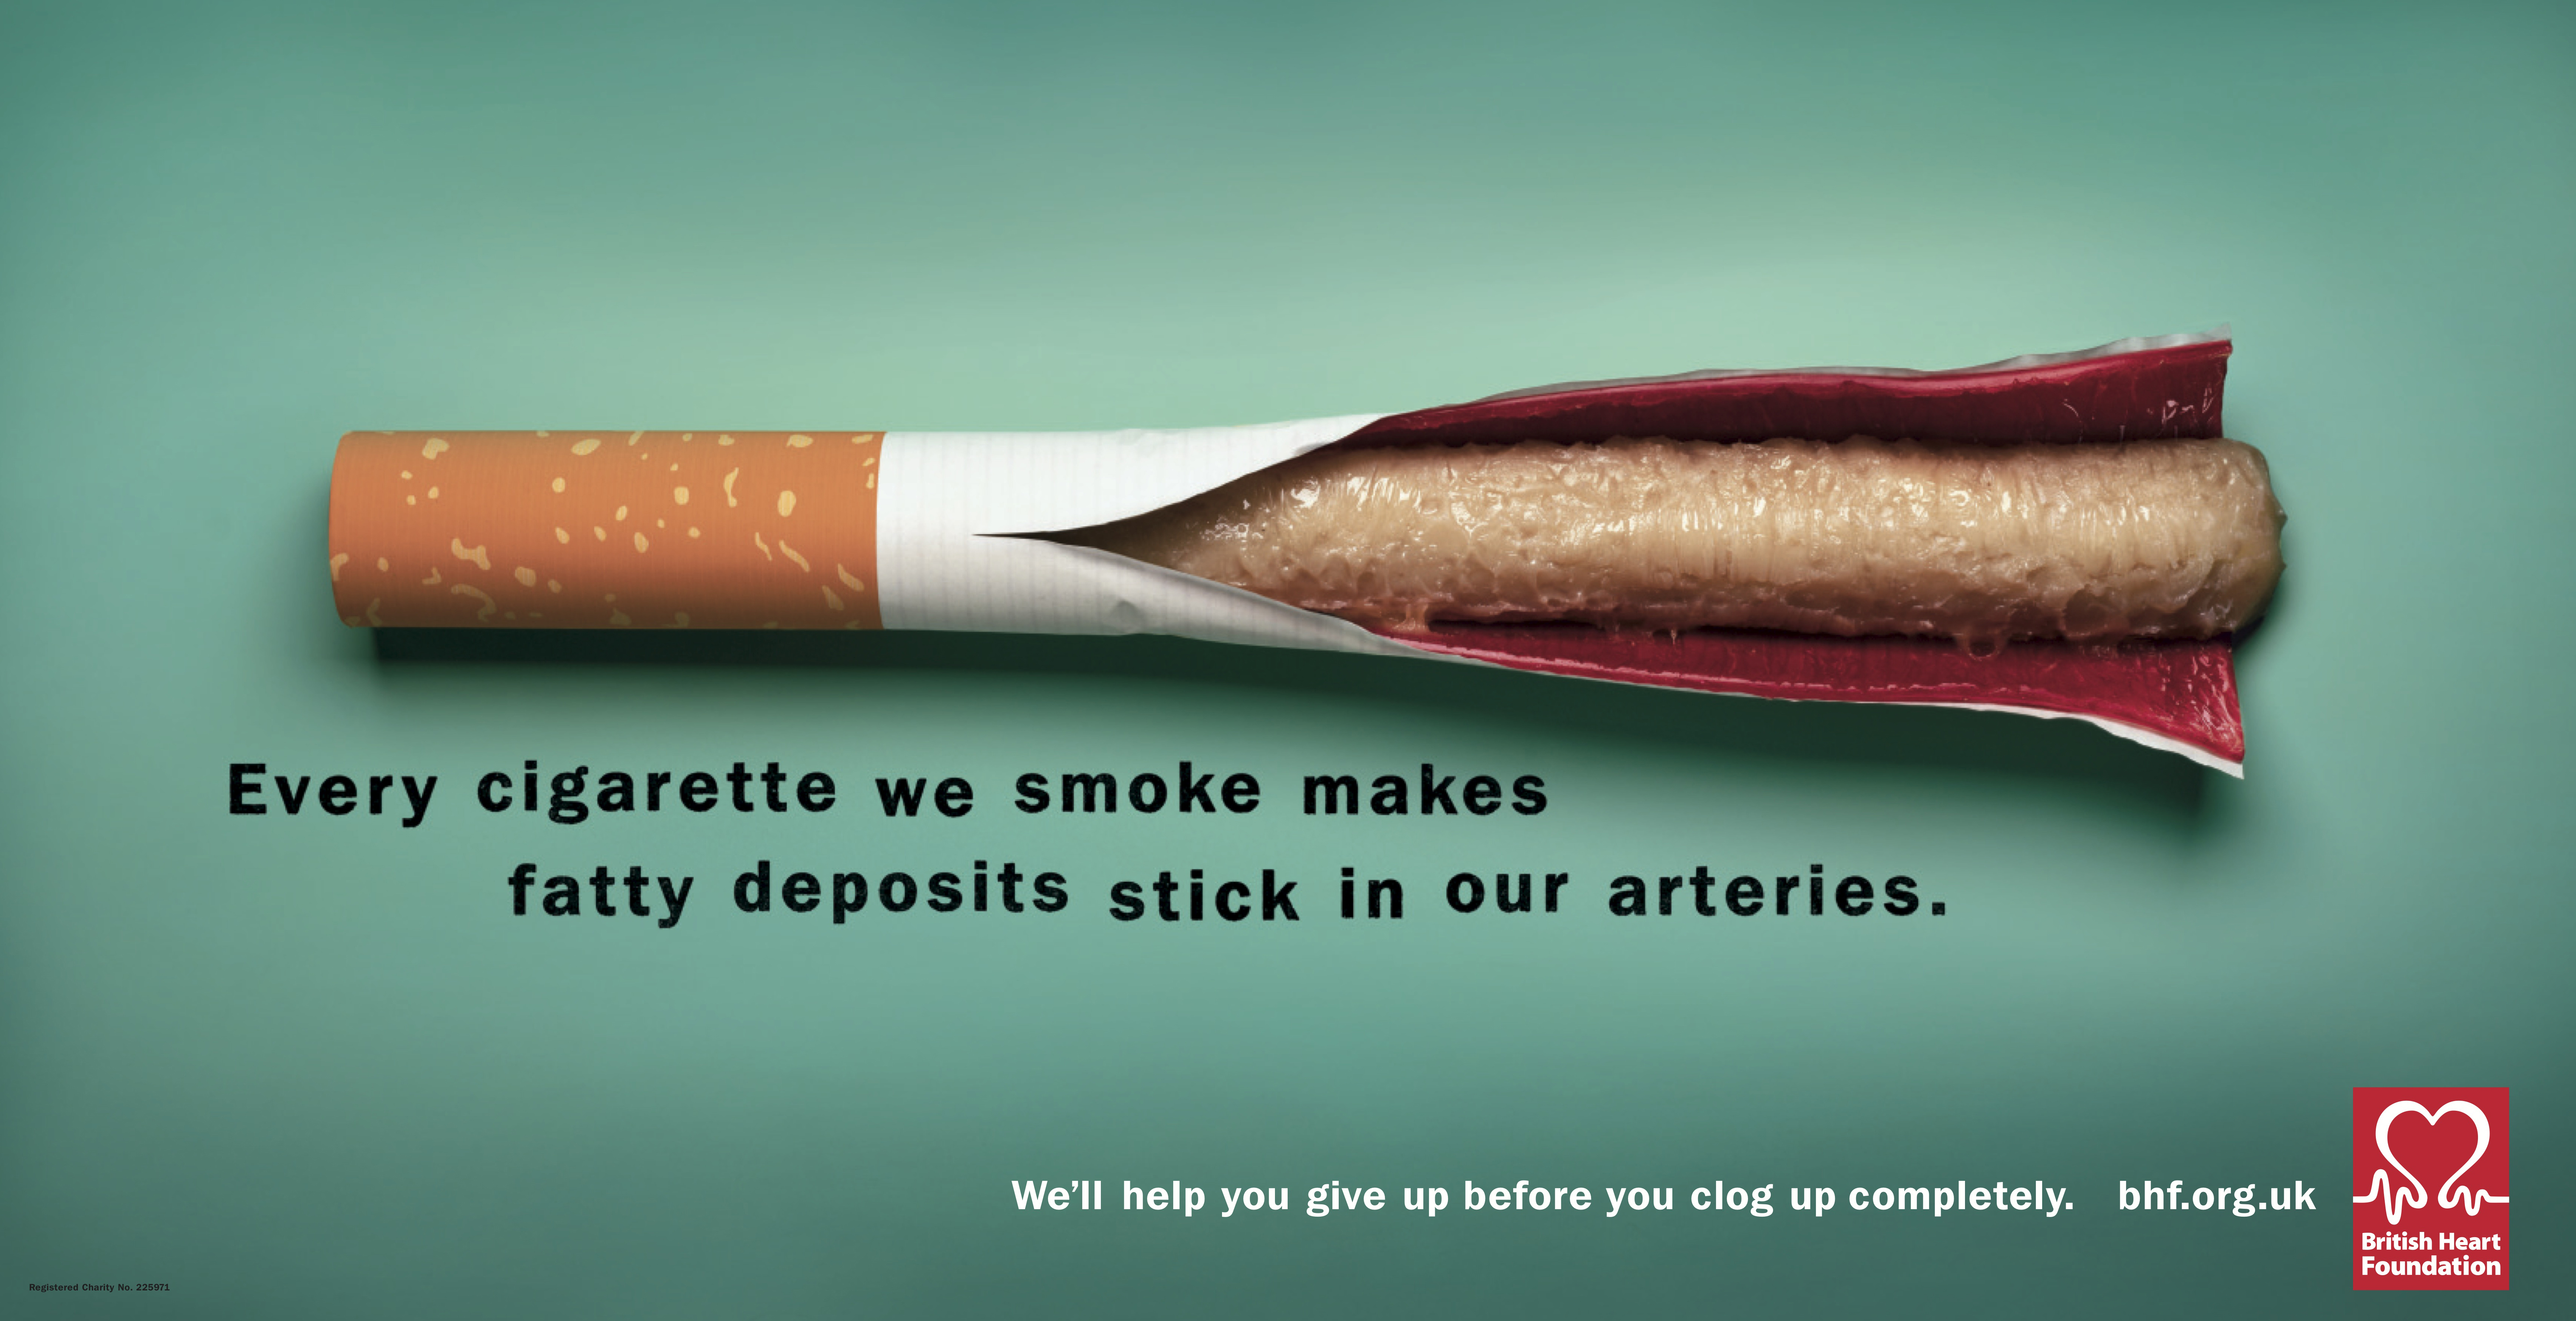 BHF cigarette advert 2004